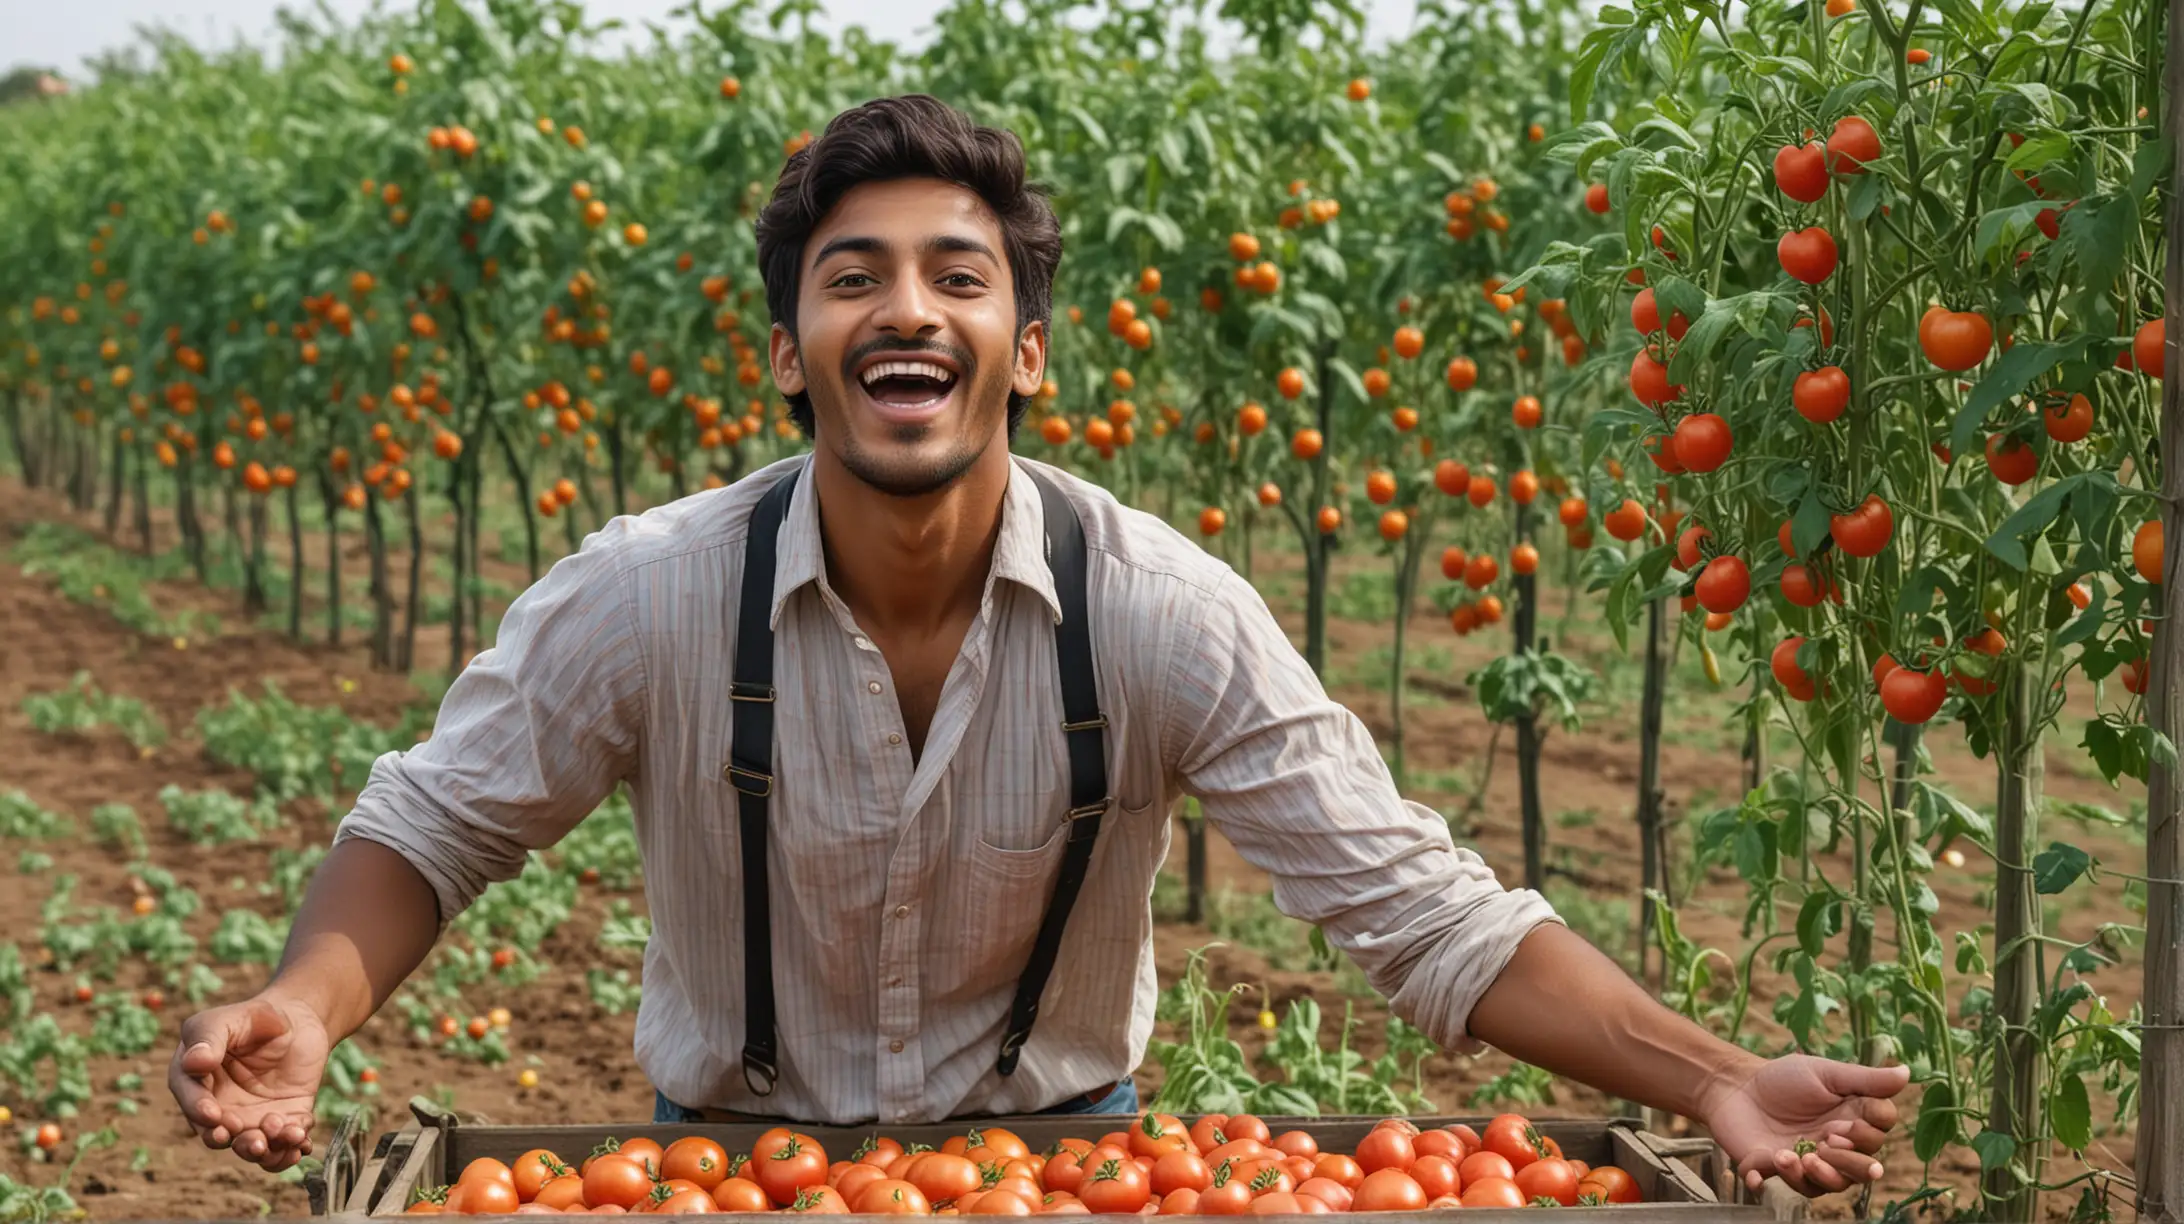 Joyful Young Indian Farmer Celebrates Bountiful Tomato Harvest in Vibrant Field